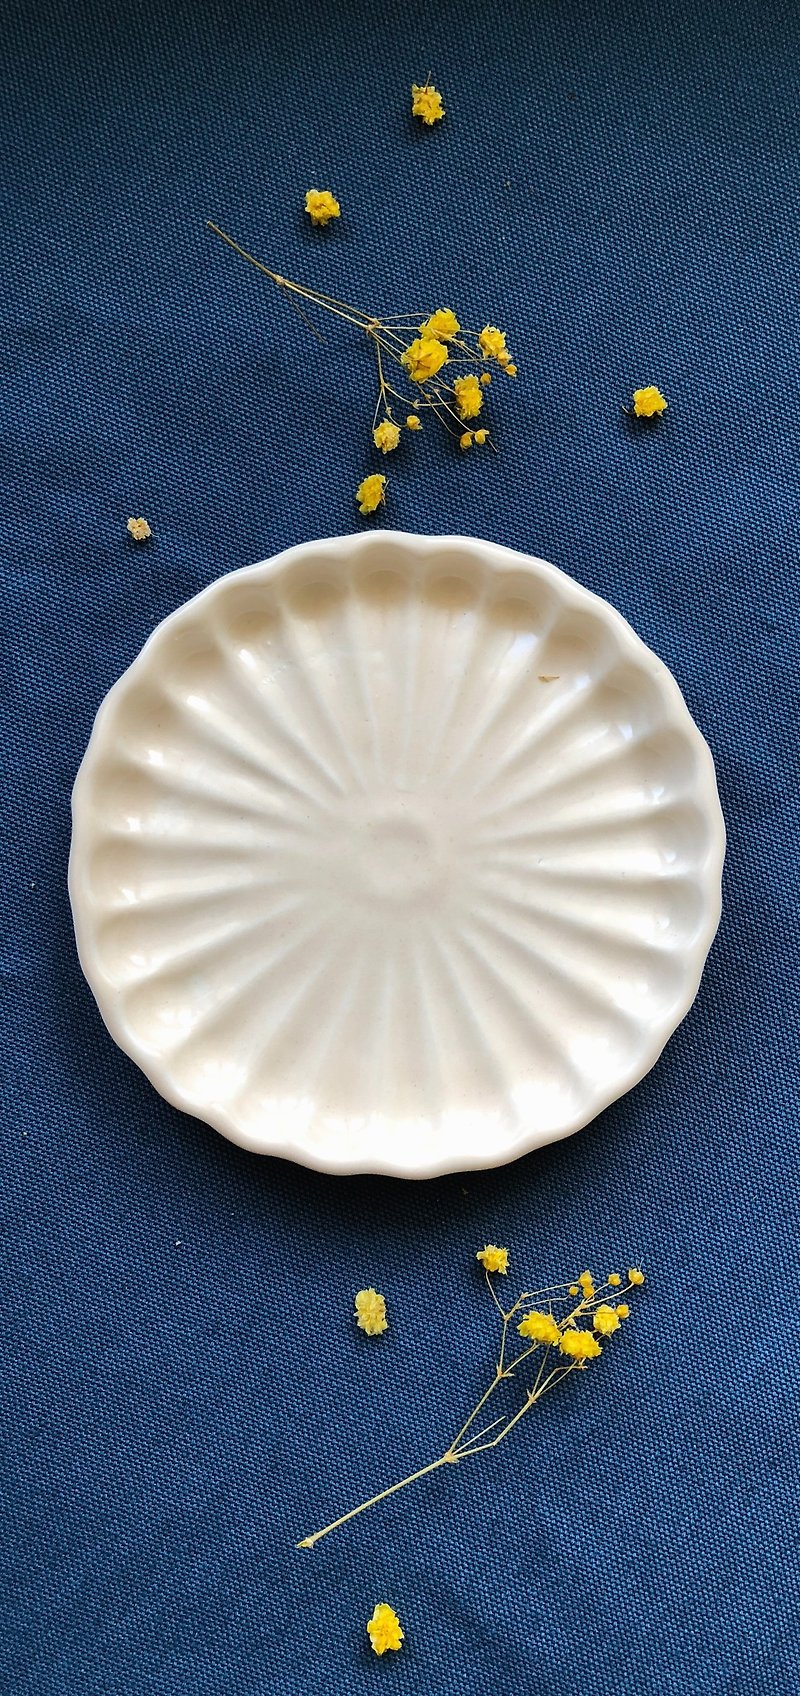 White glaze floret - Small Plates & Saucers - Porcelain White